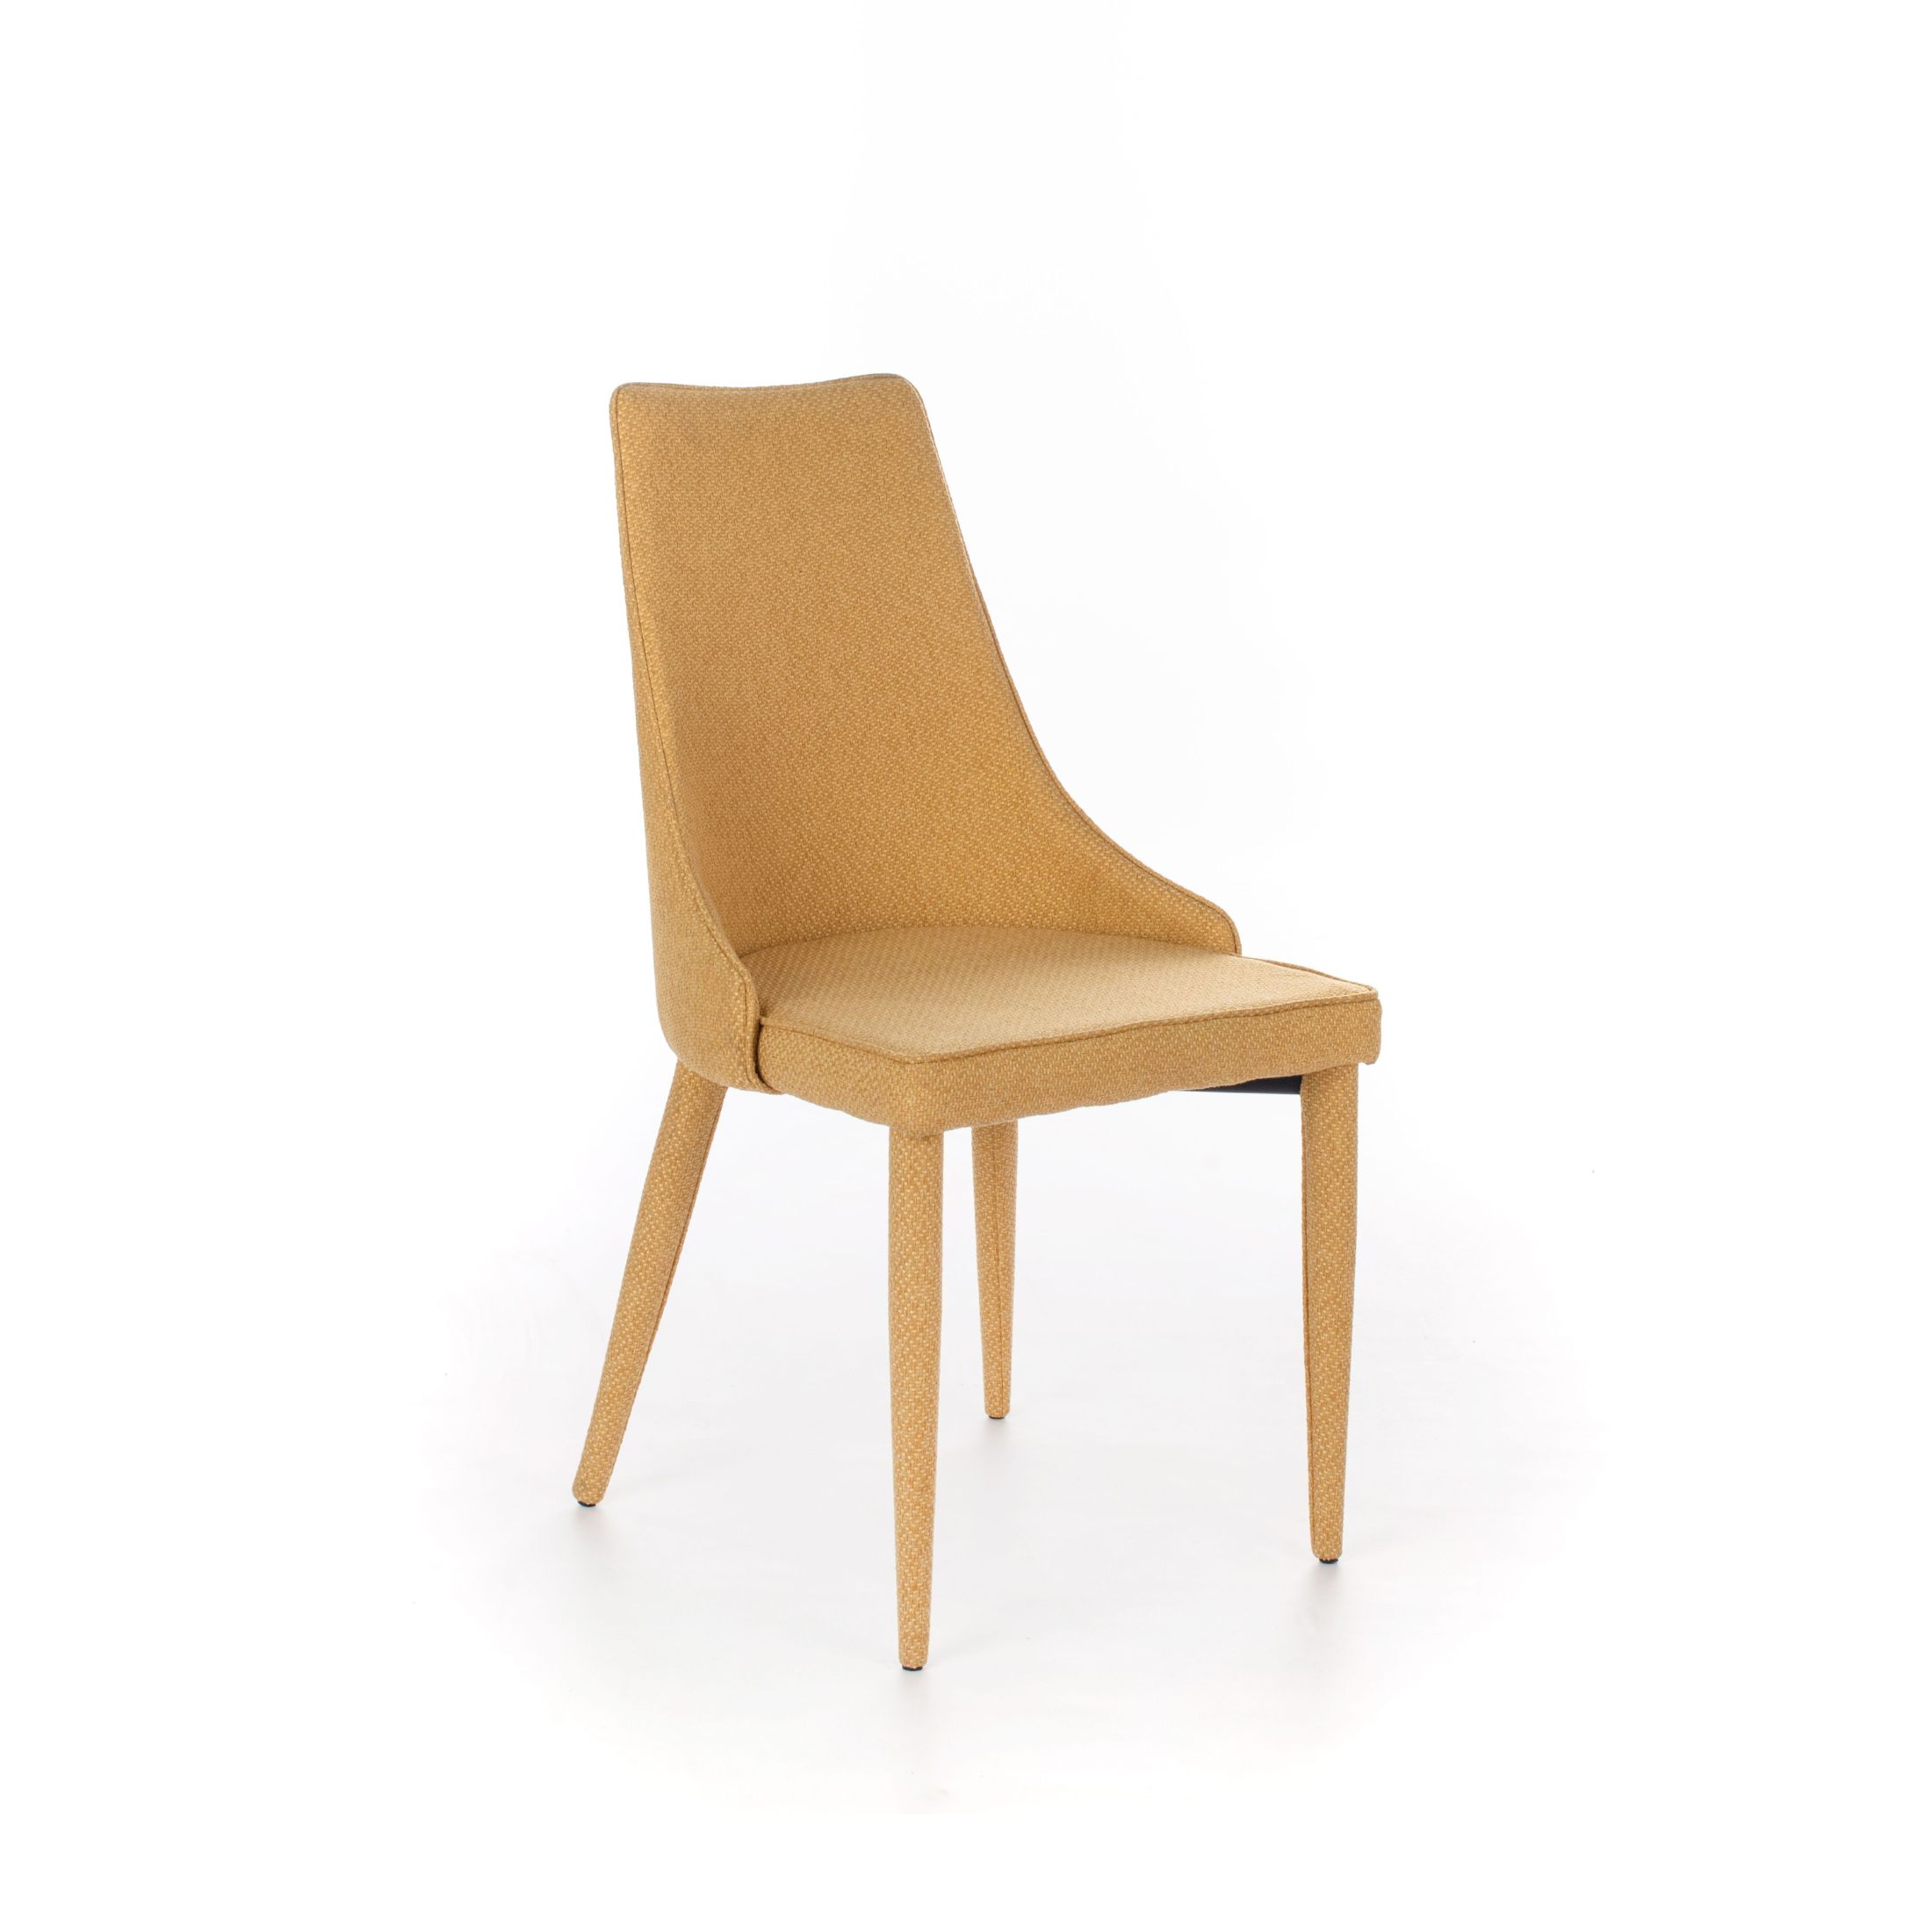 Set sedie imbottite "Myriam" poltrone moderne in tessuto cm 46x46 91h